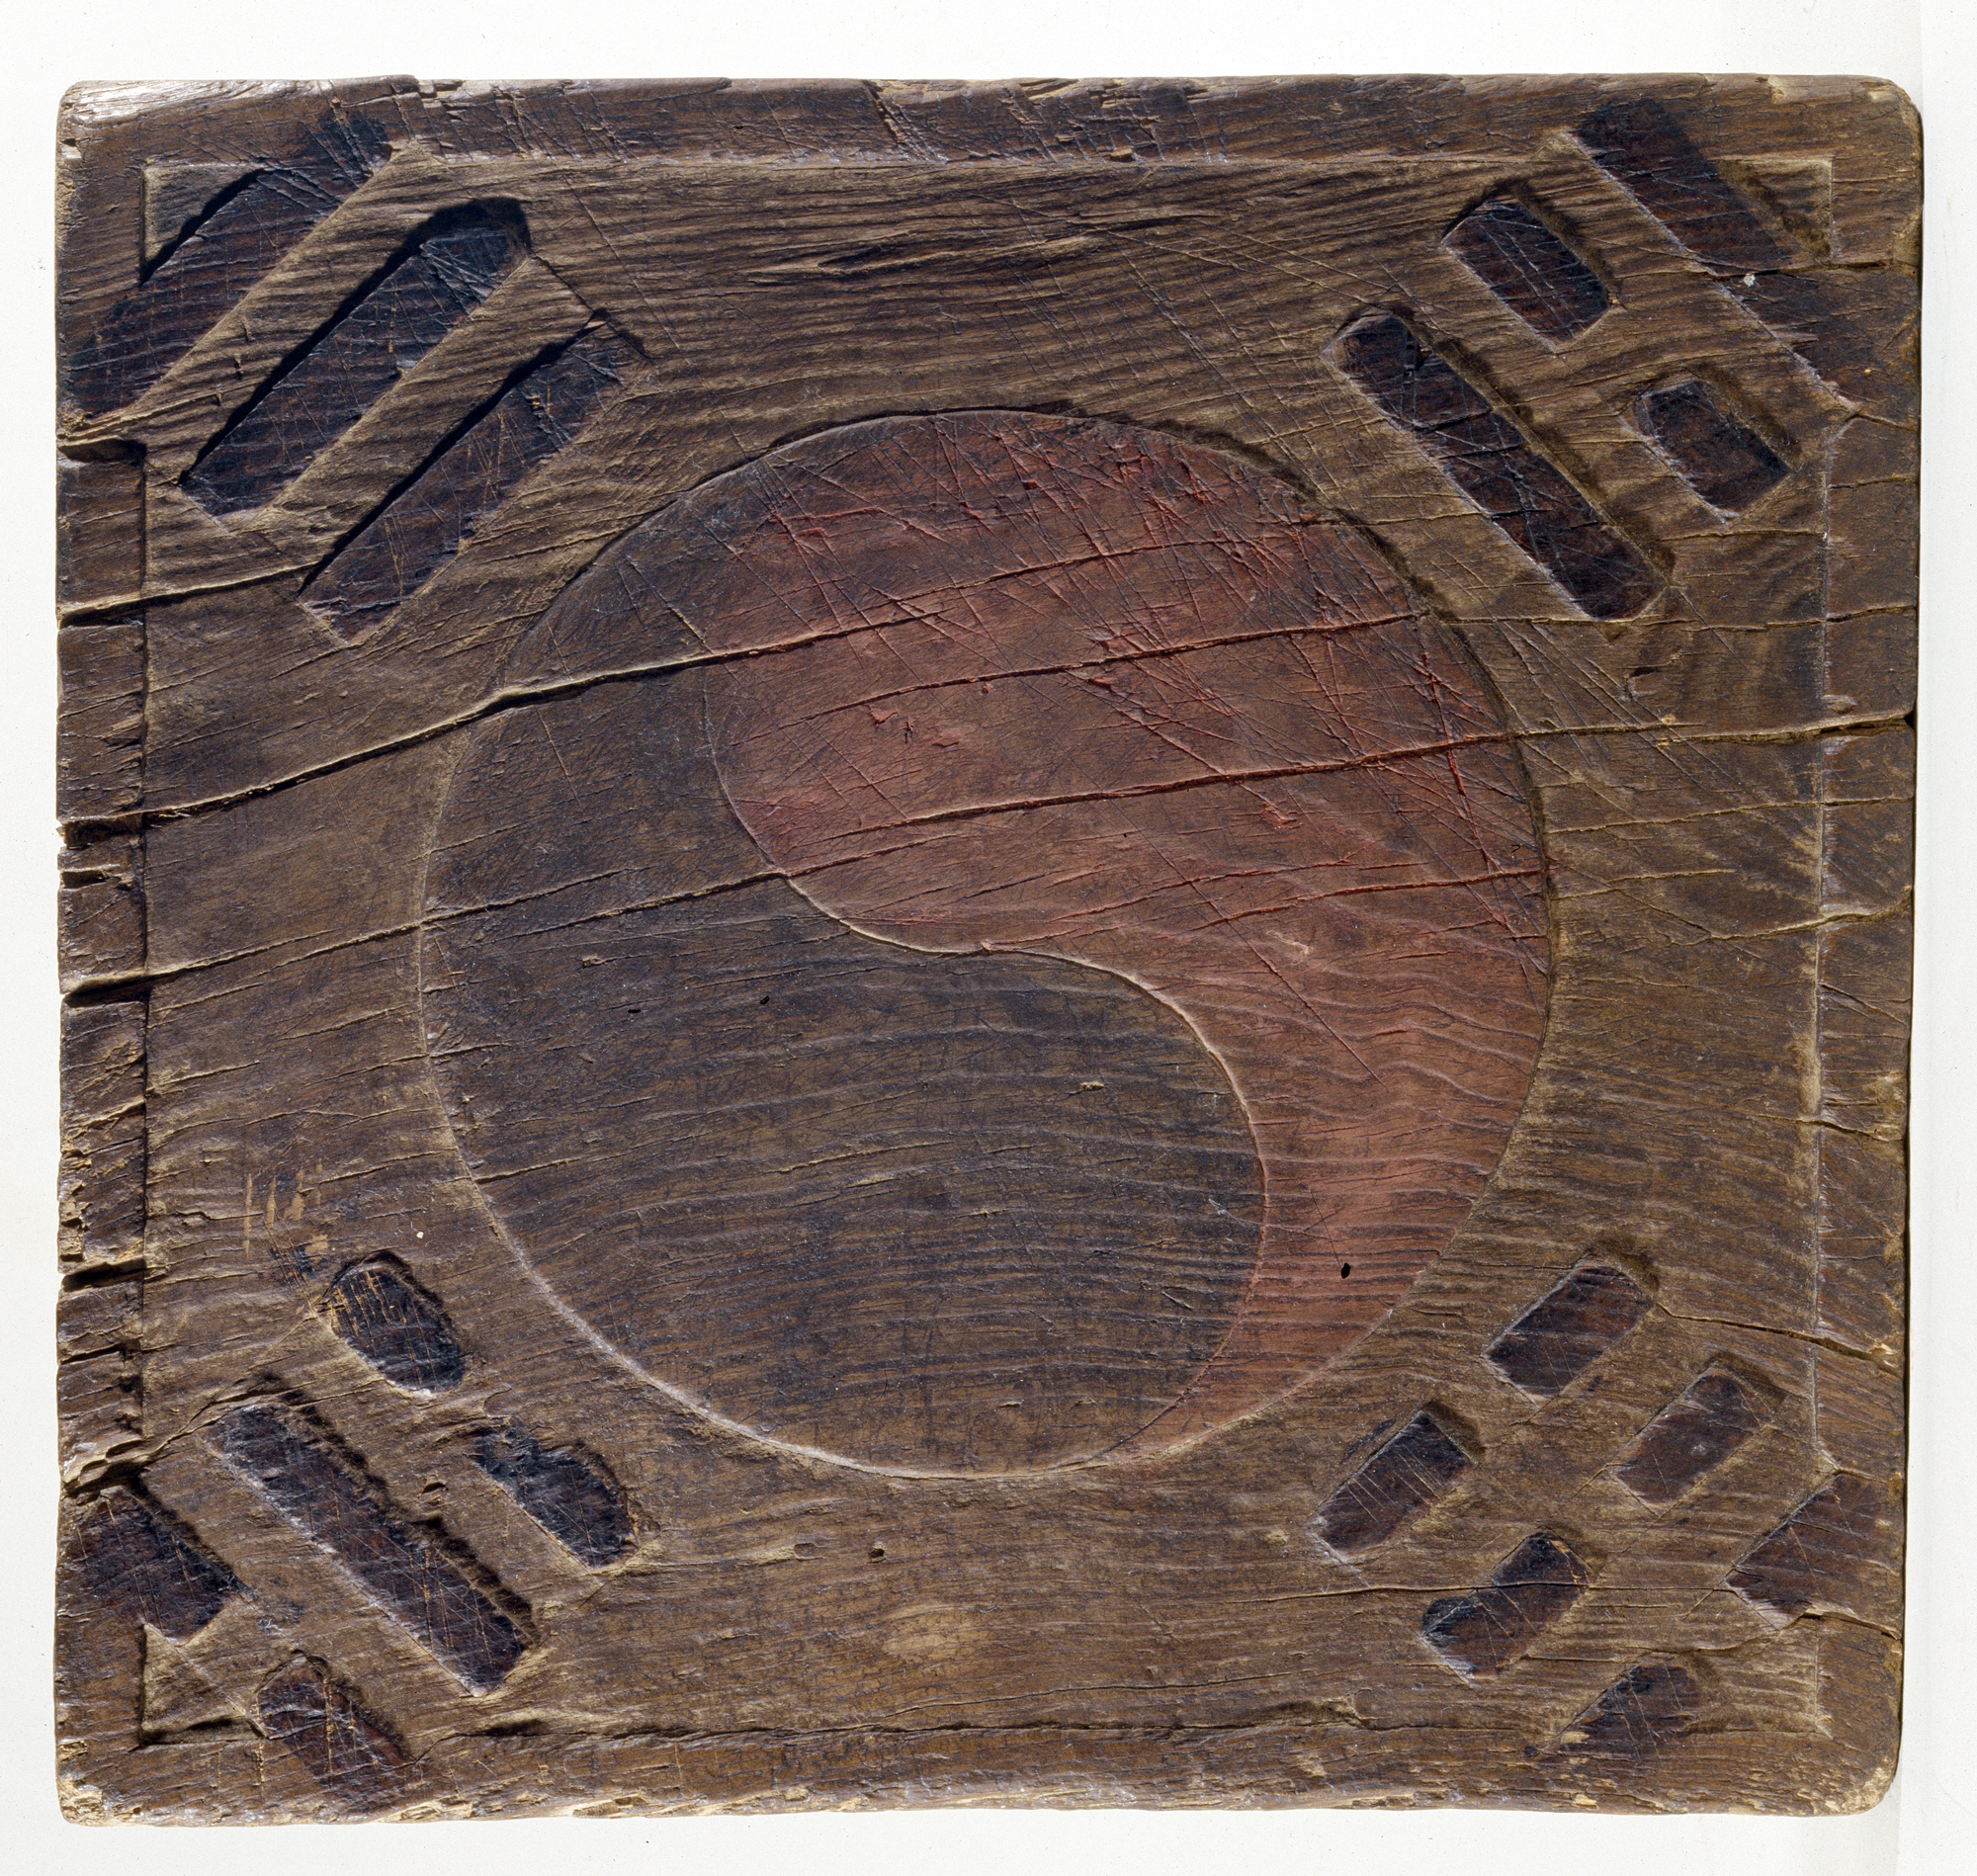   Taegukgi Wood Engraving Block.&nbsp;   Korea, 1919. Etched on wood block. 12.6 x 11.8 x 2.6 in (32×30 × 6.5 cm). 